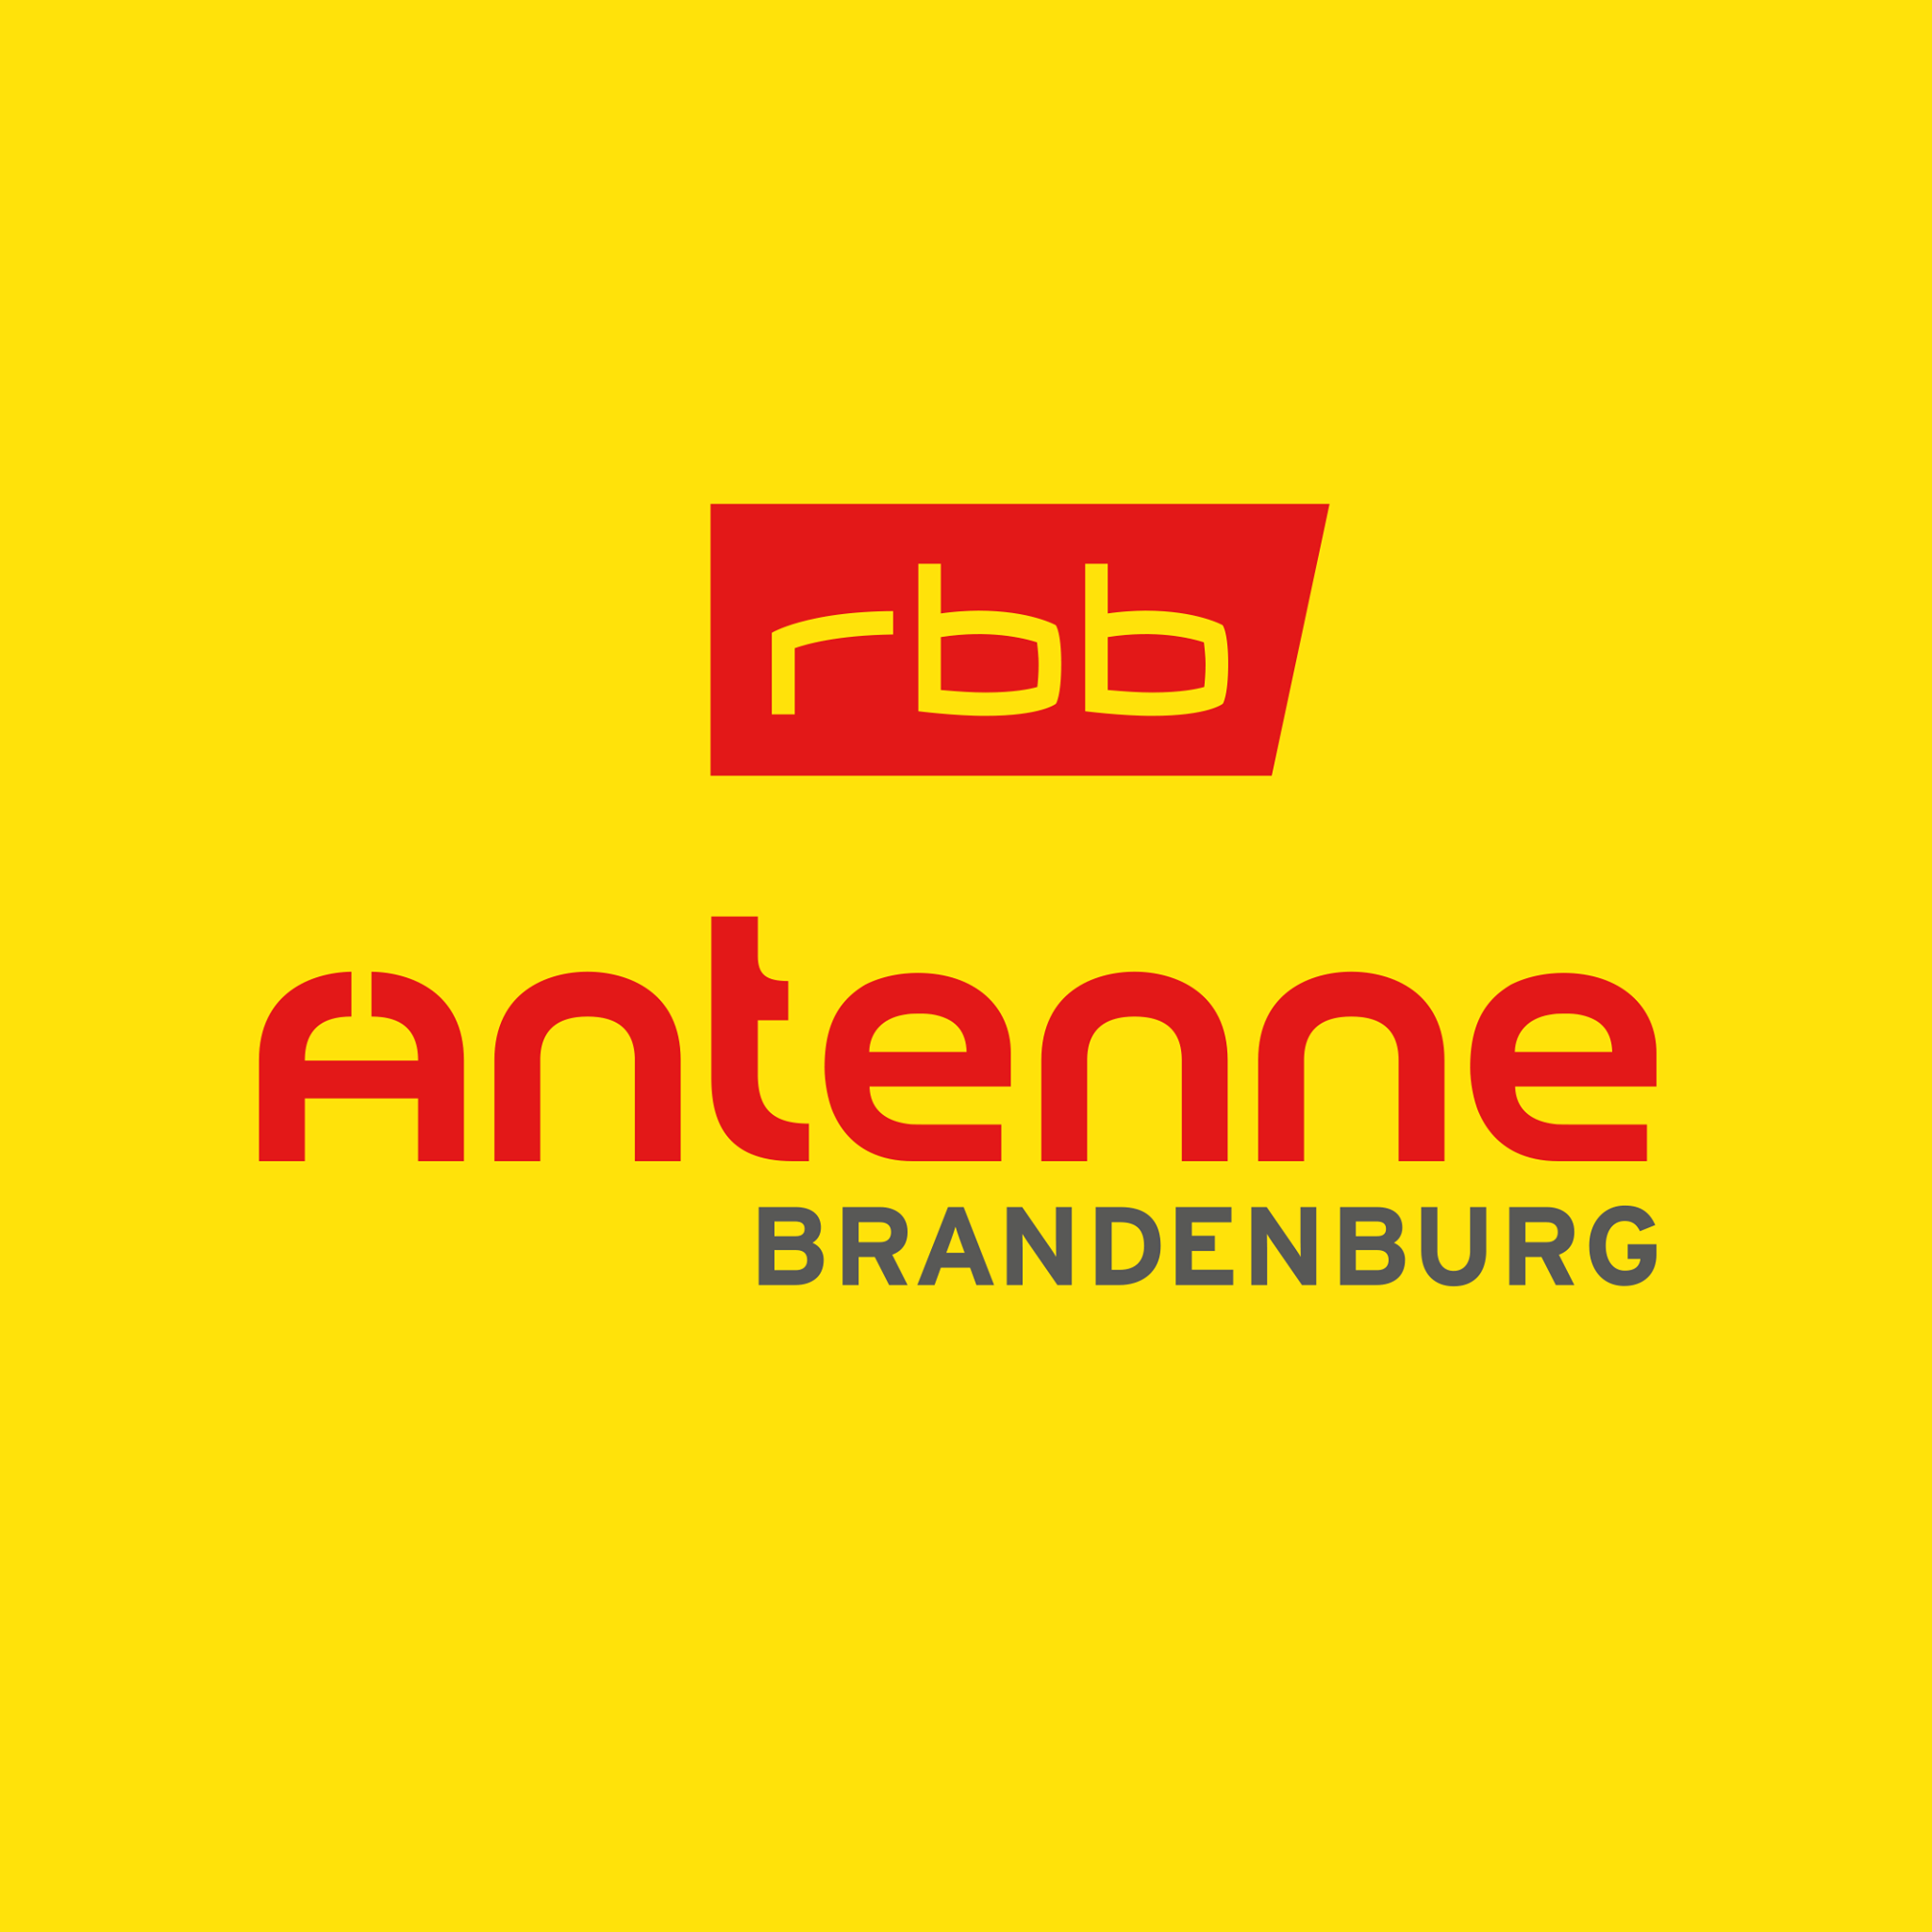 rbb Antenne Brandenburg